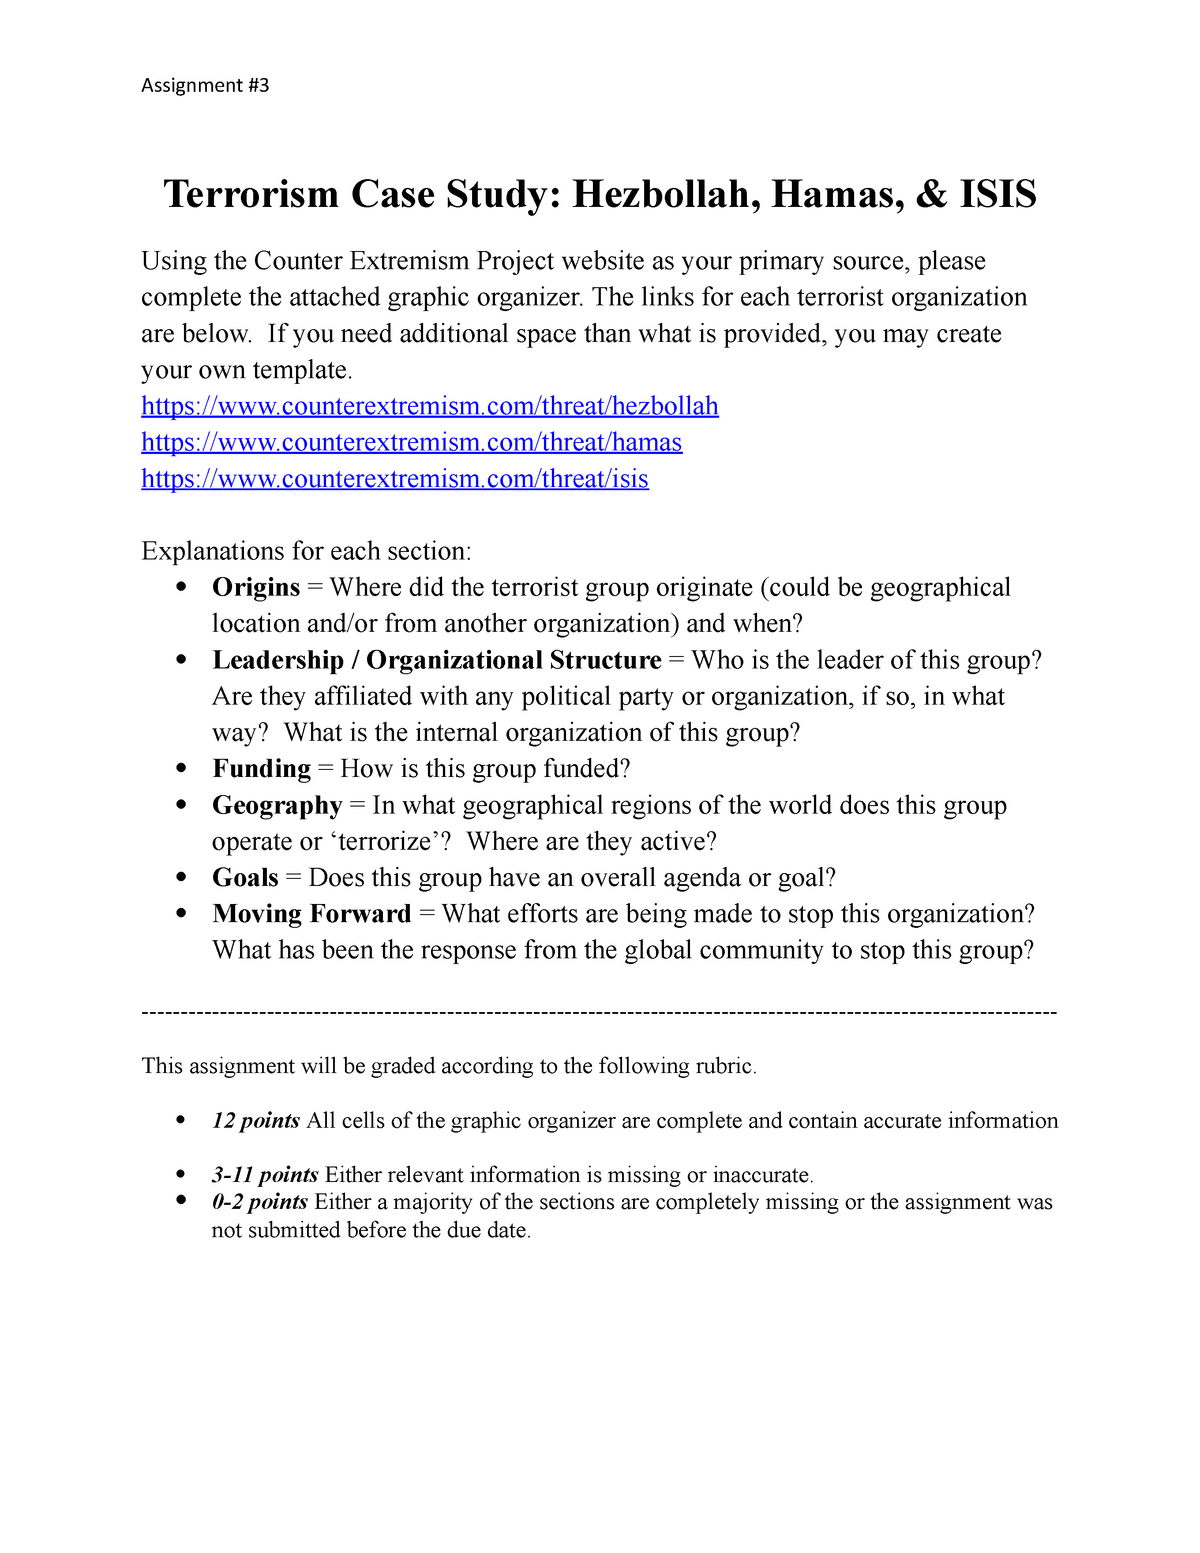 comparative case study terrorism